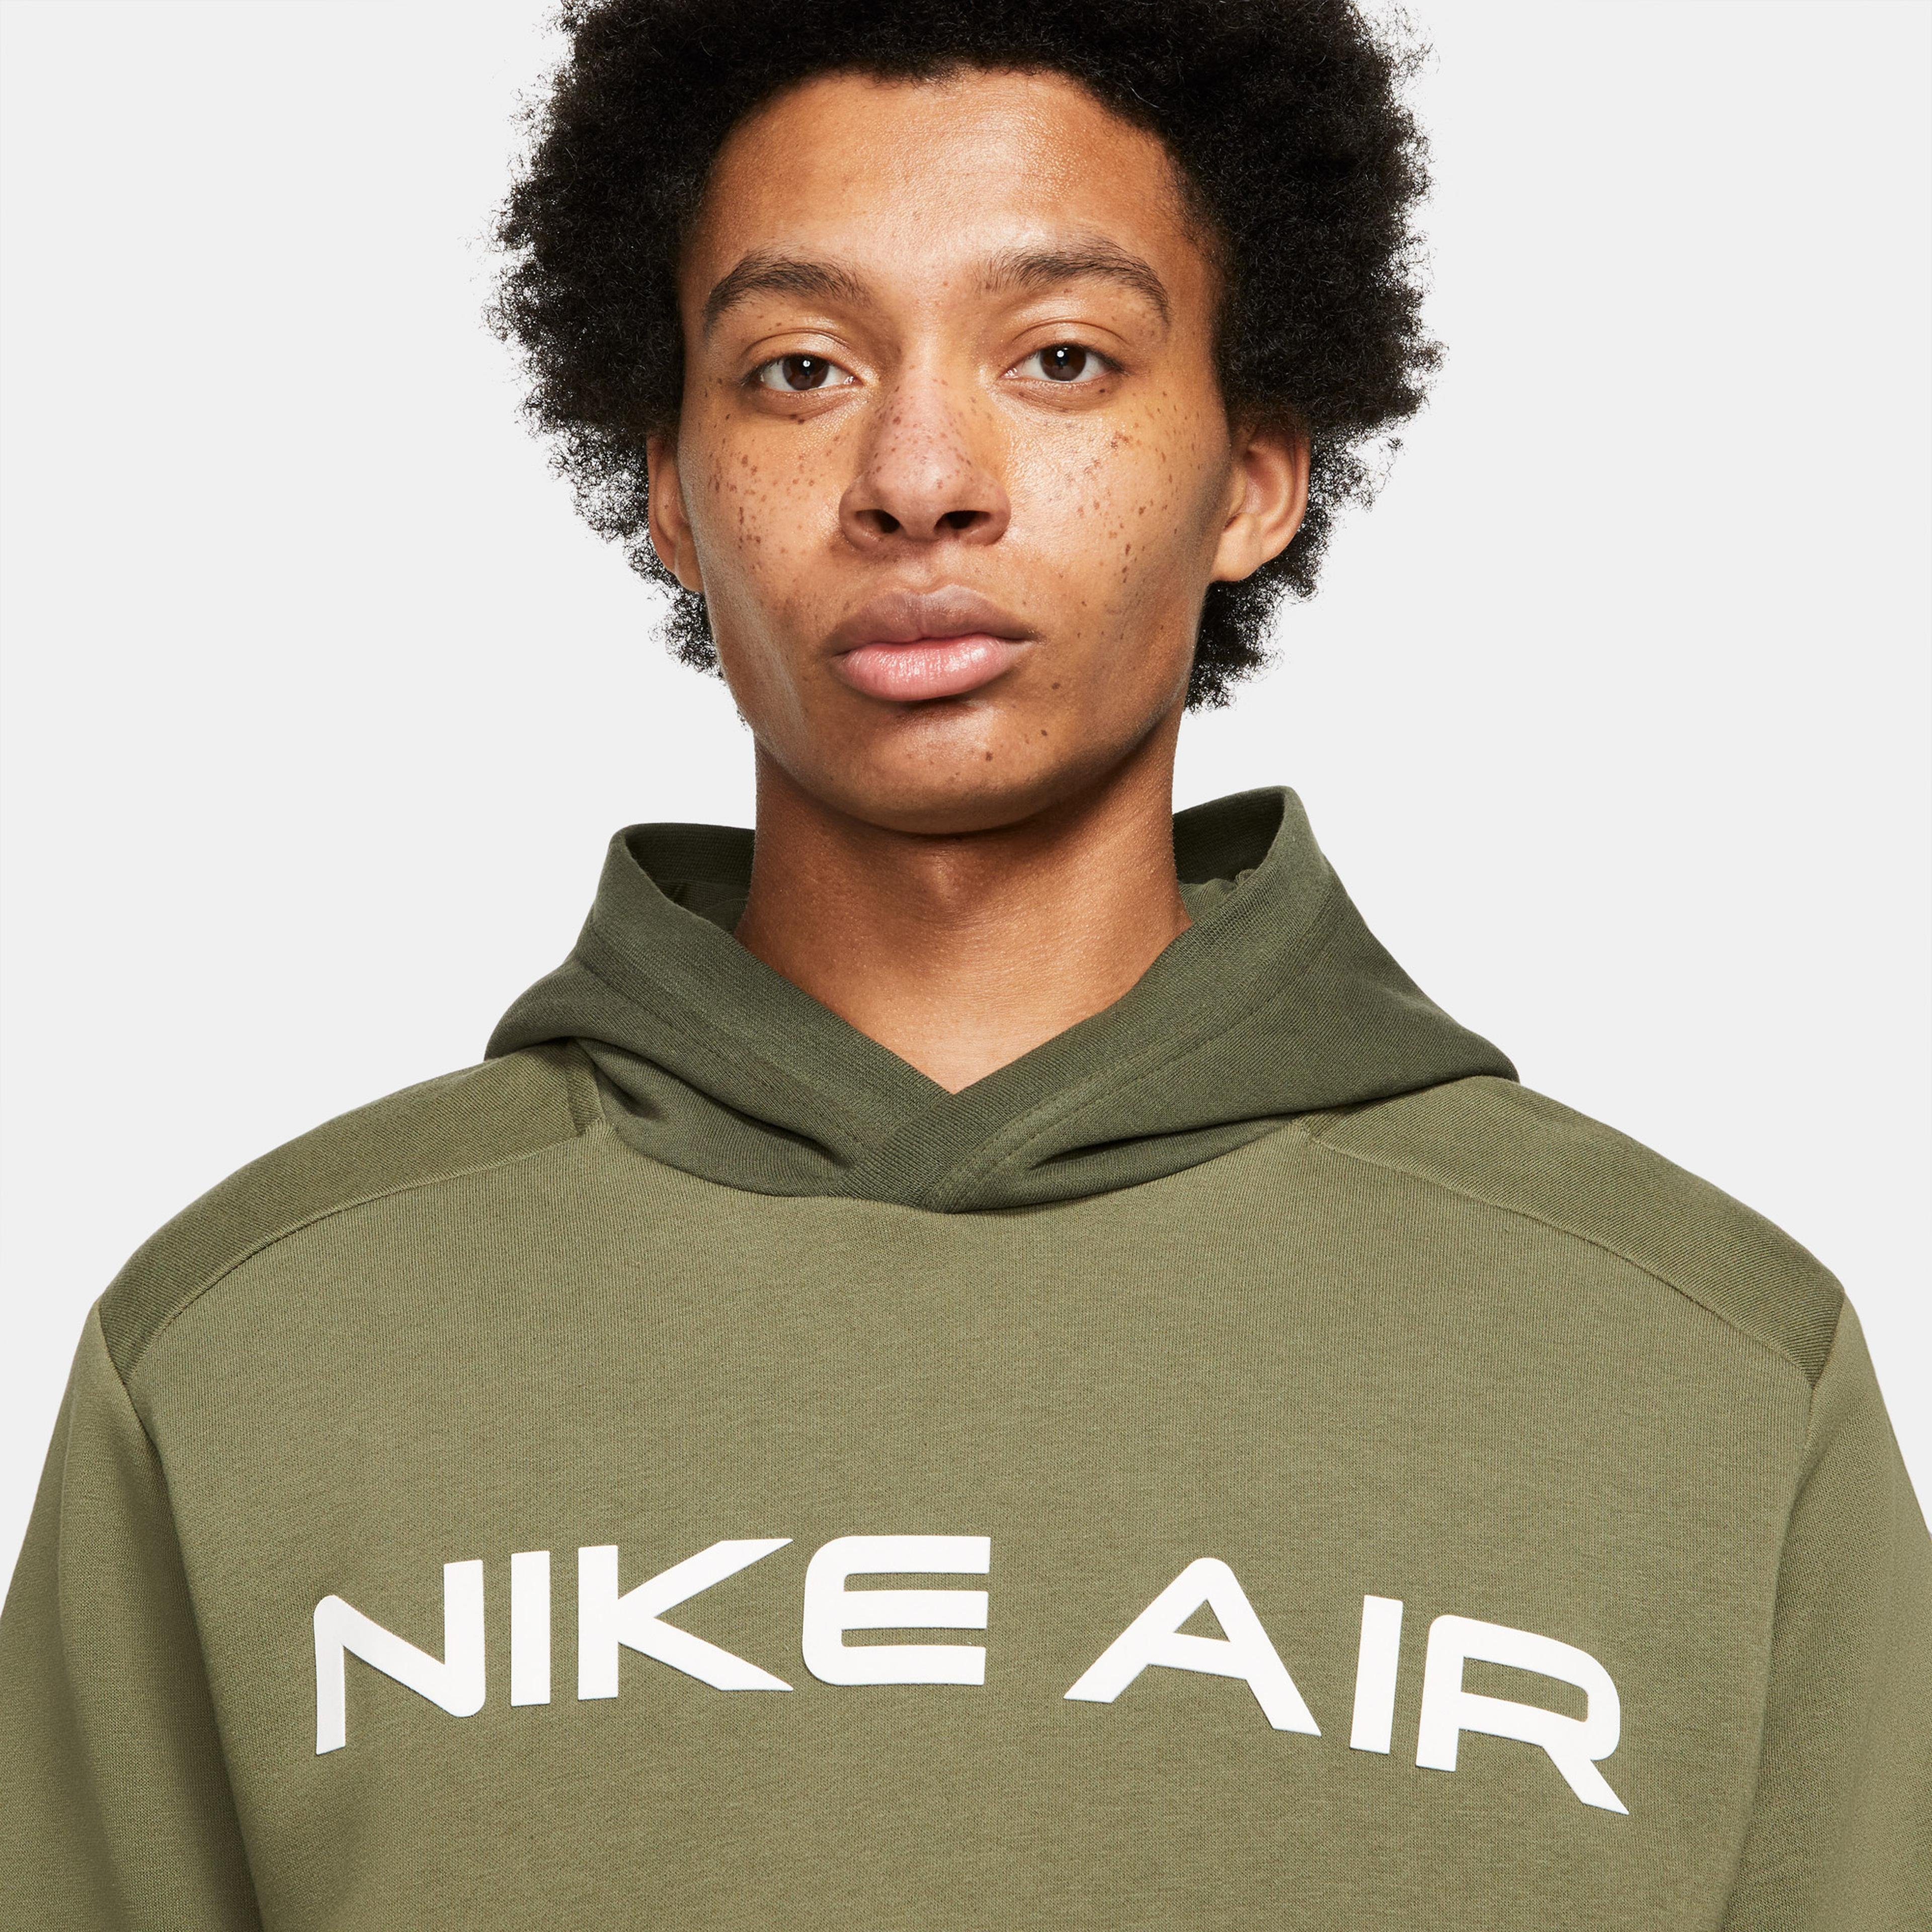 Nike Sportswear Air Pullover Flc Erkek Haki Sweatshirt